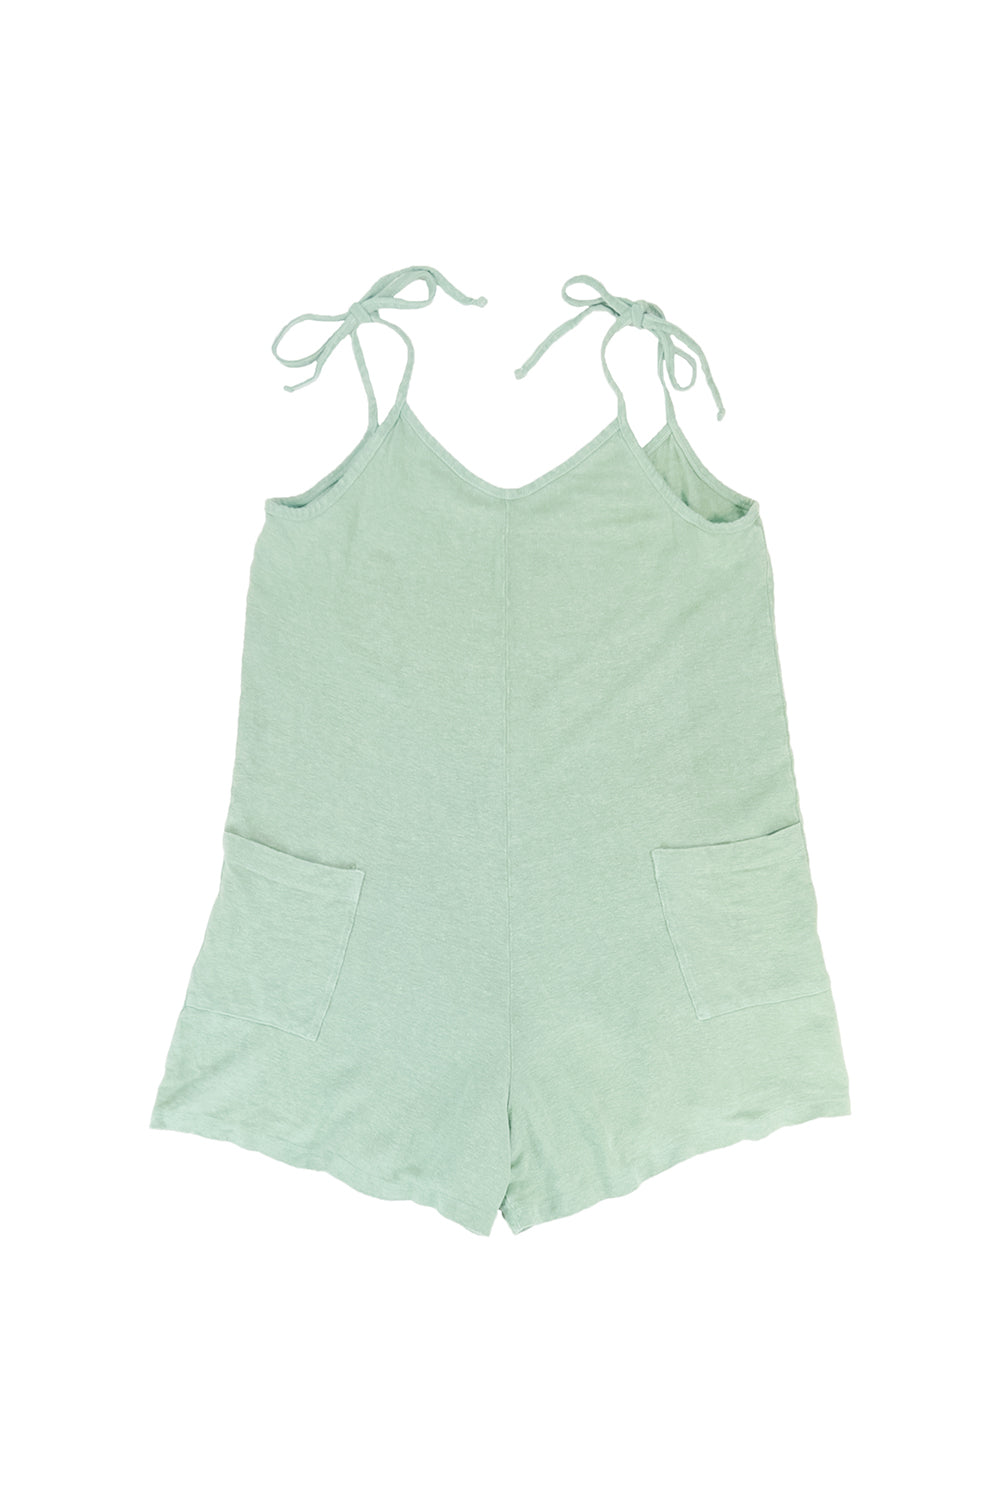 100% Hemp Sespe Short | Jungmaven Hemp Clothing & Accessories / Color: Sage Green